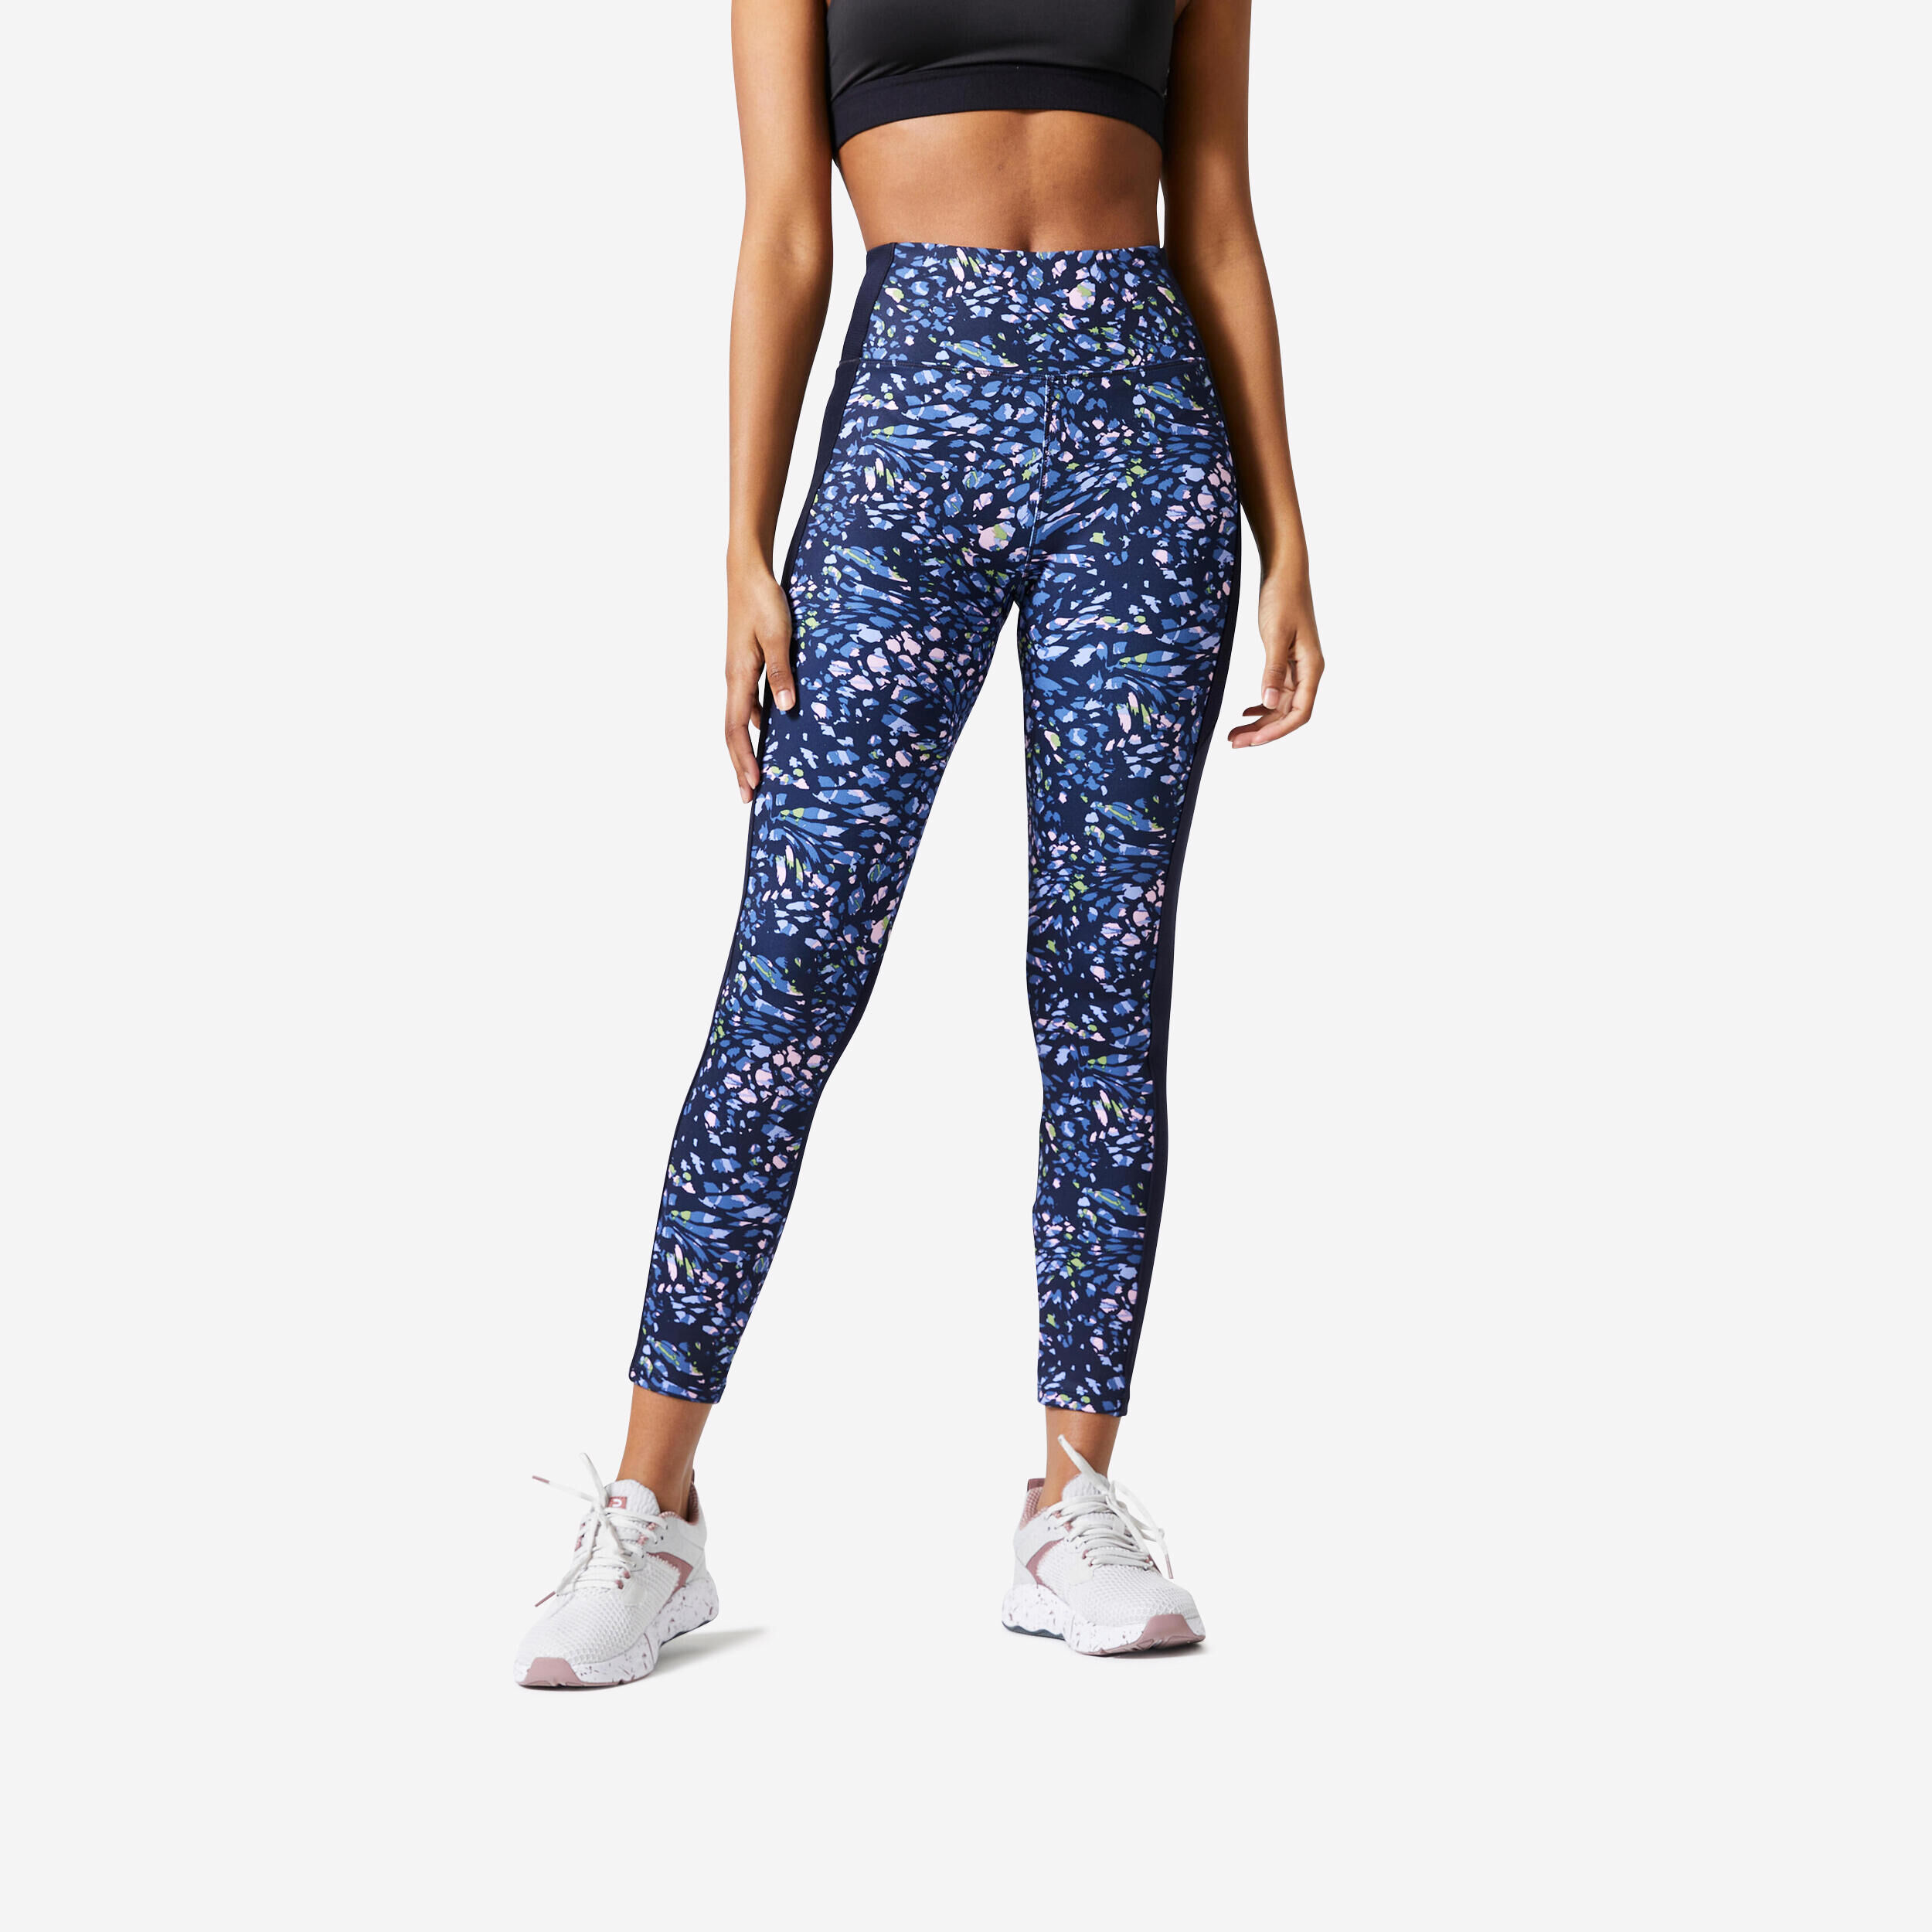 DOMYOS Women's phone pocket fitness high-waisted leggings, blue print